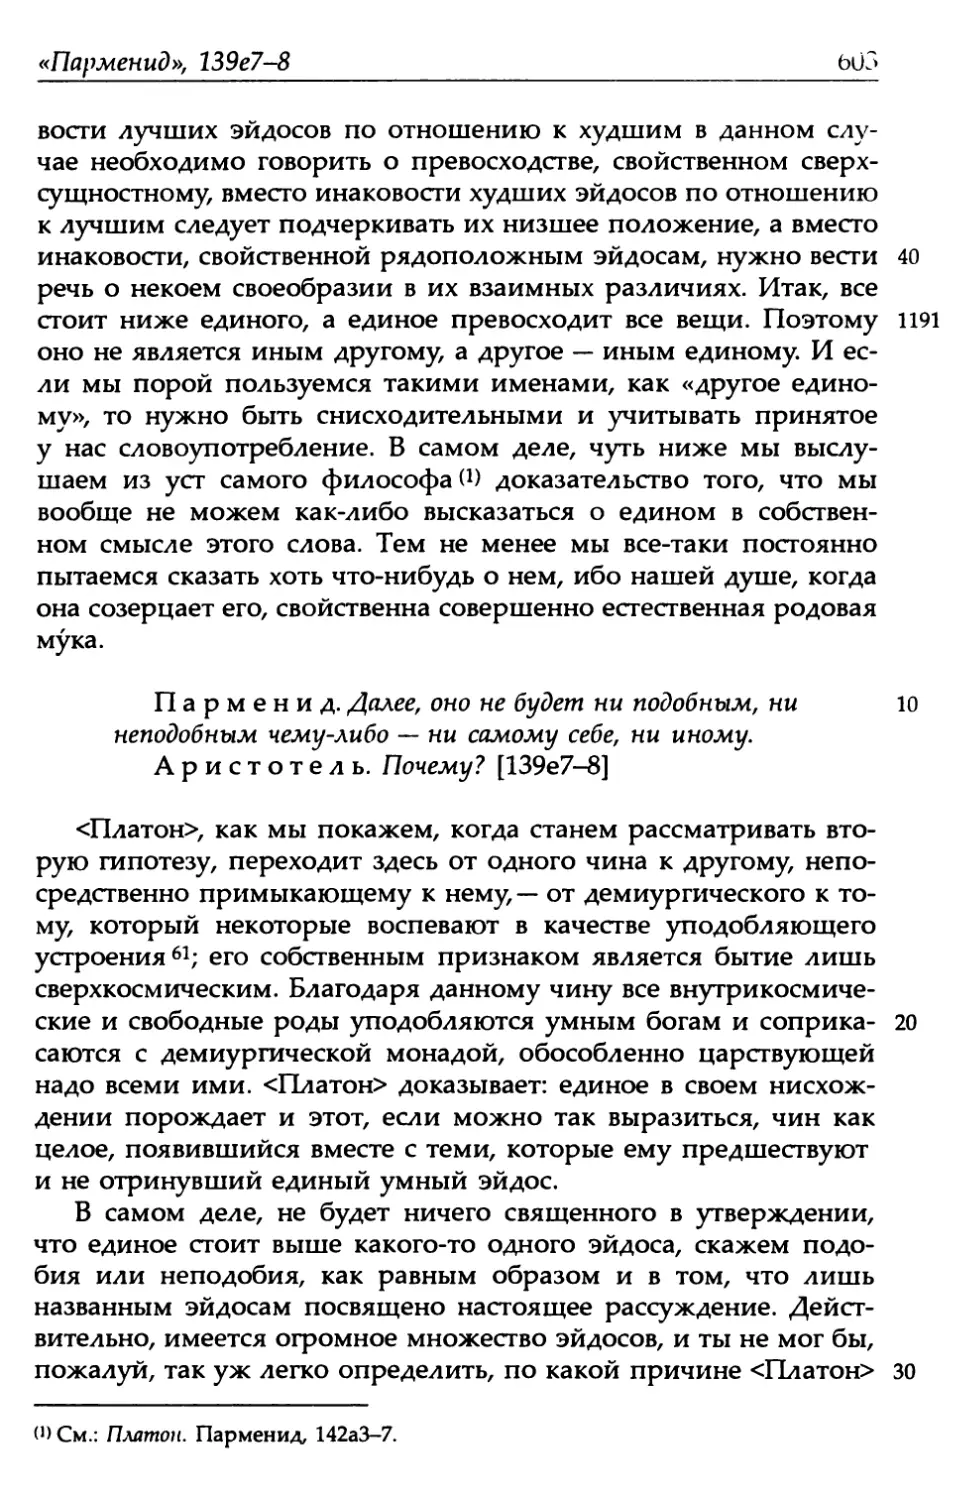 «Парменид», 139е7-8